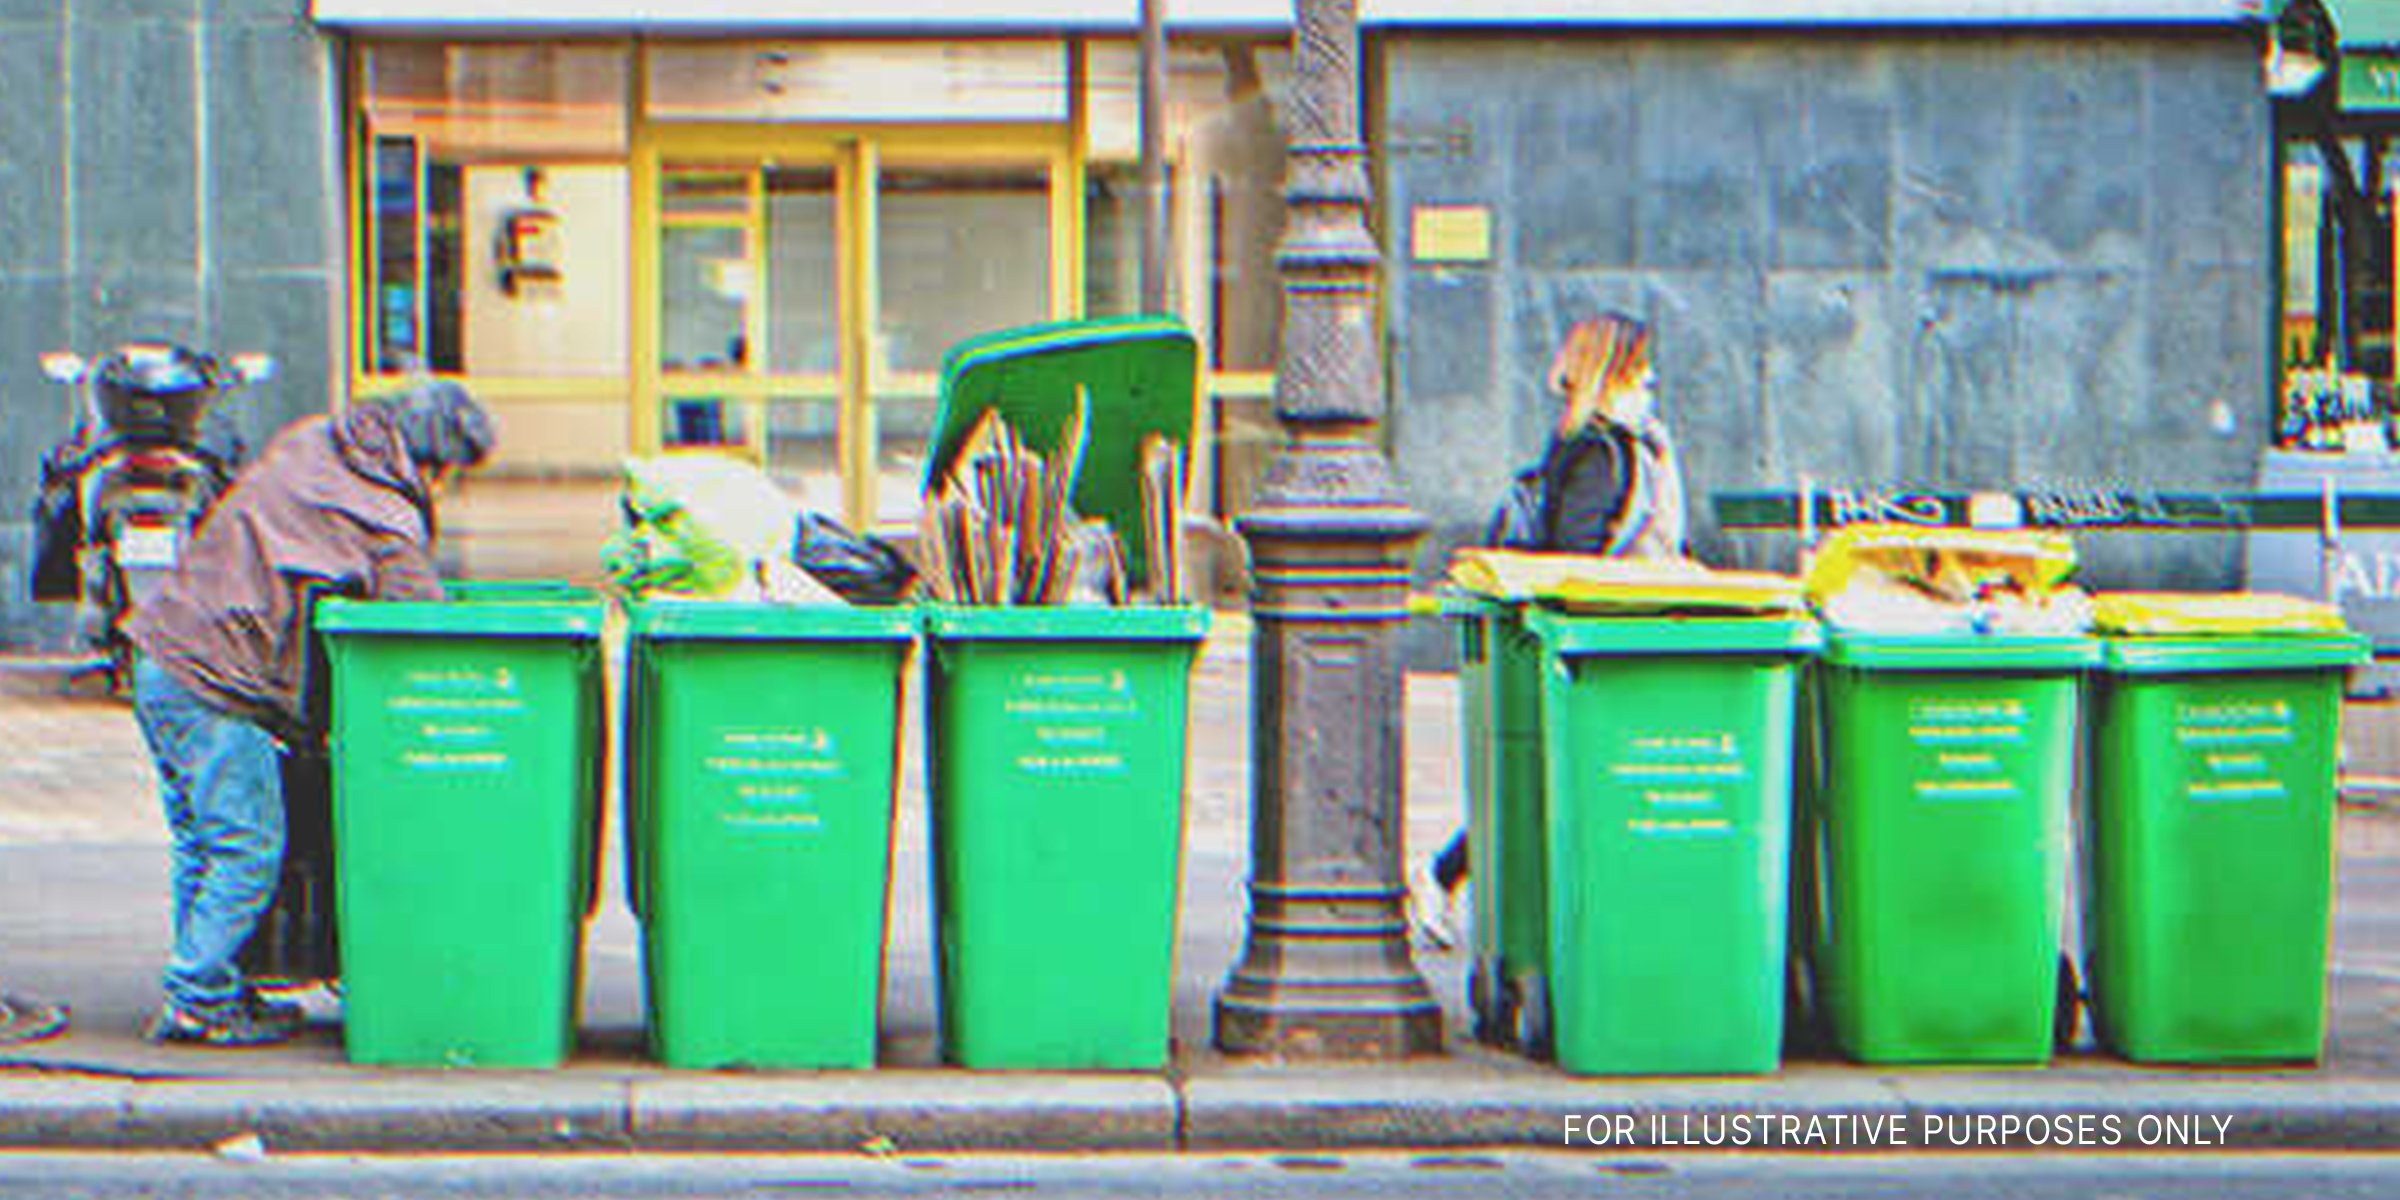 Homeless man digging in trash. | Source: Shutterstock